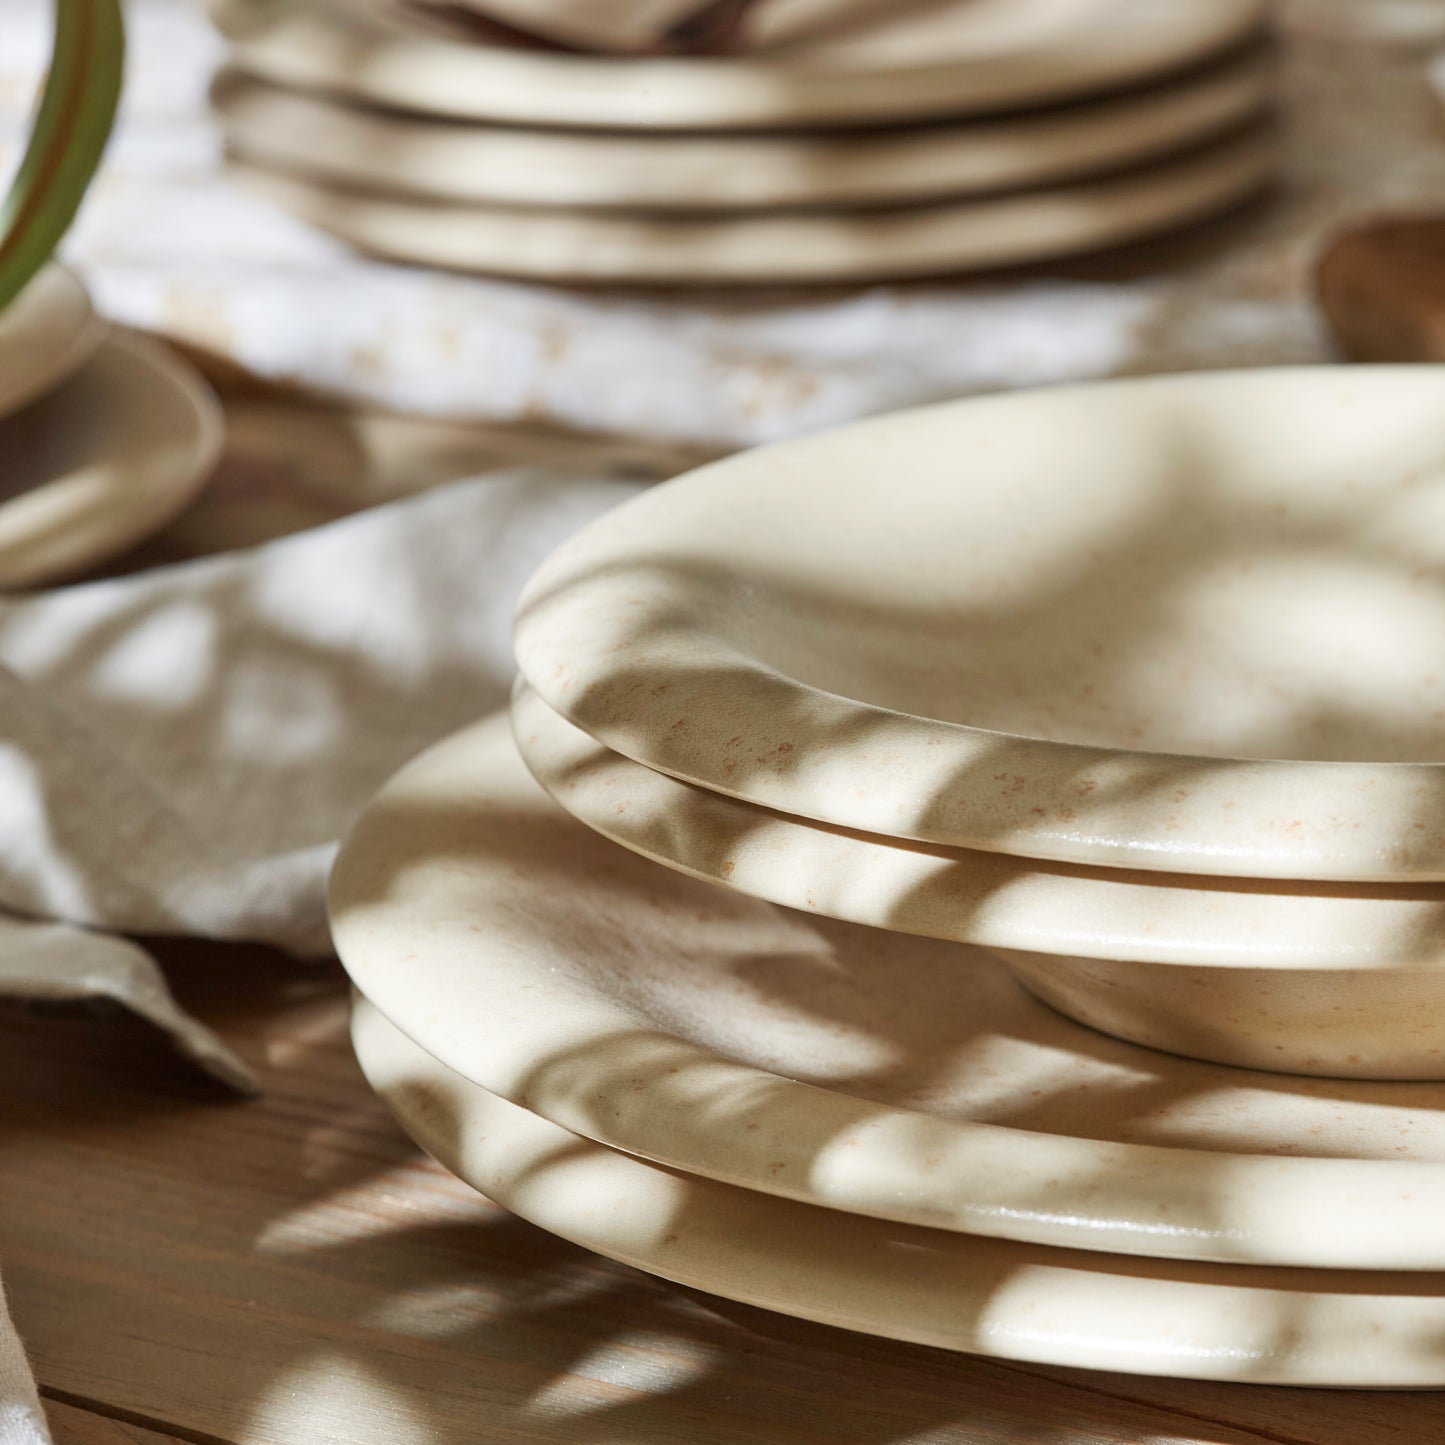 Aro Stoneware Dinnerware Set - Cream Matte - Crafted in Portugal - Scratch Resistant